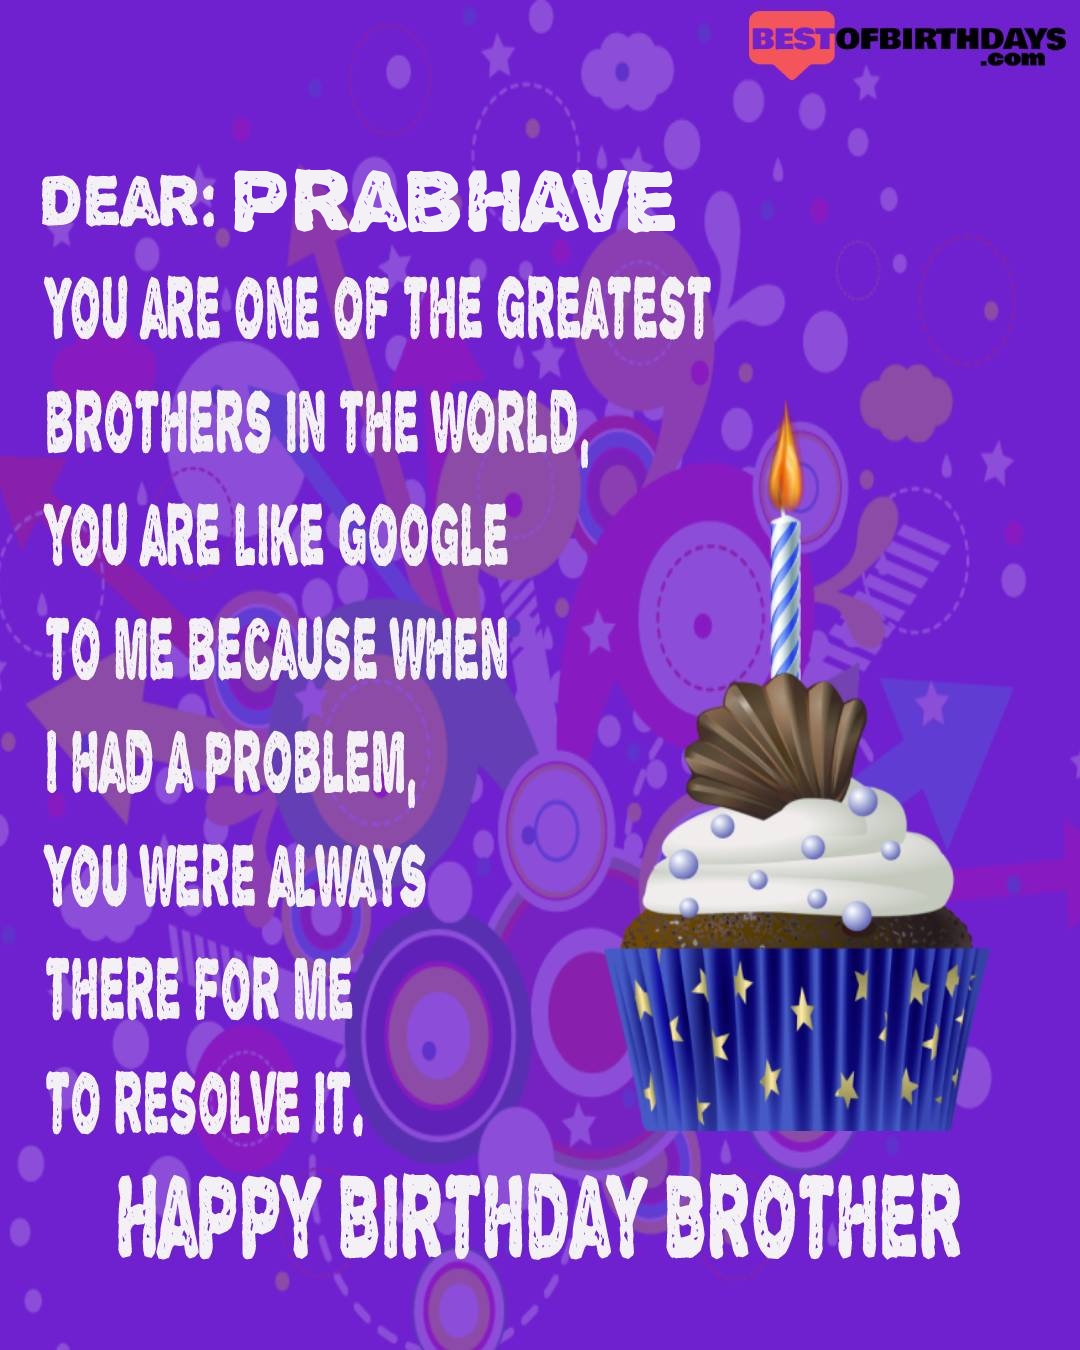 Happy birthday prabhave bhai brother bro